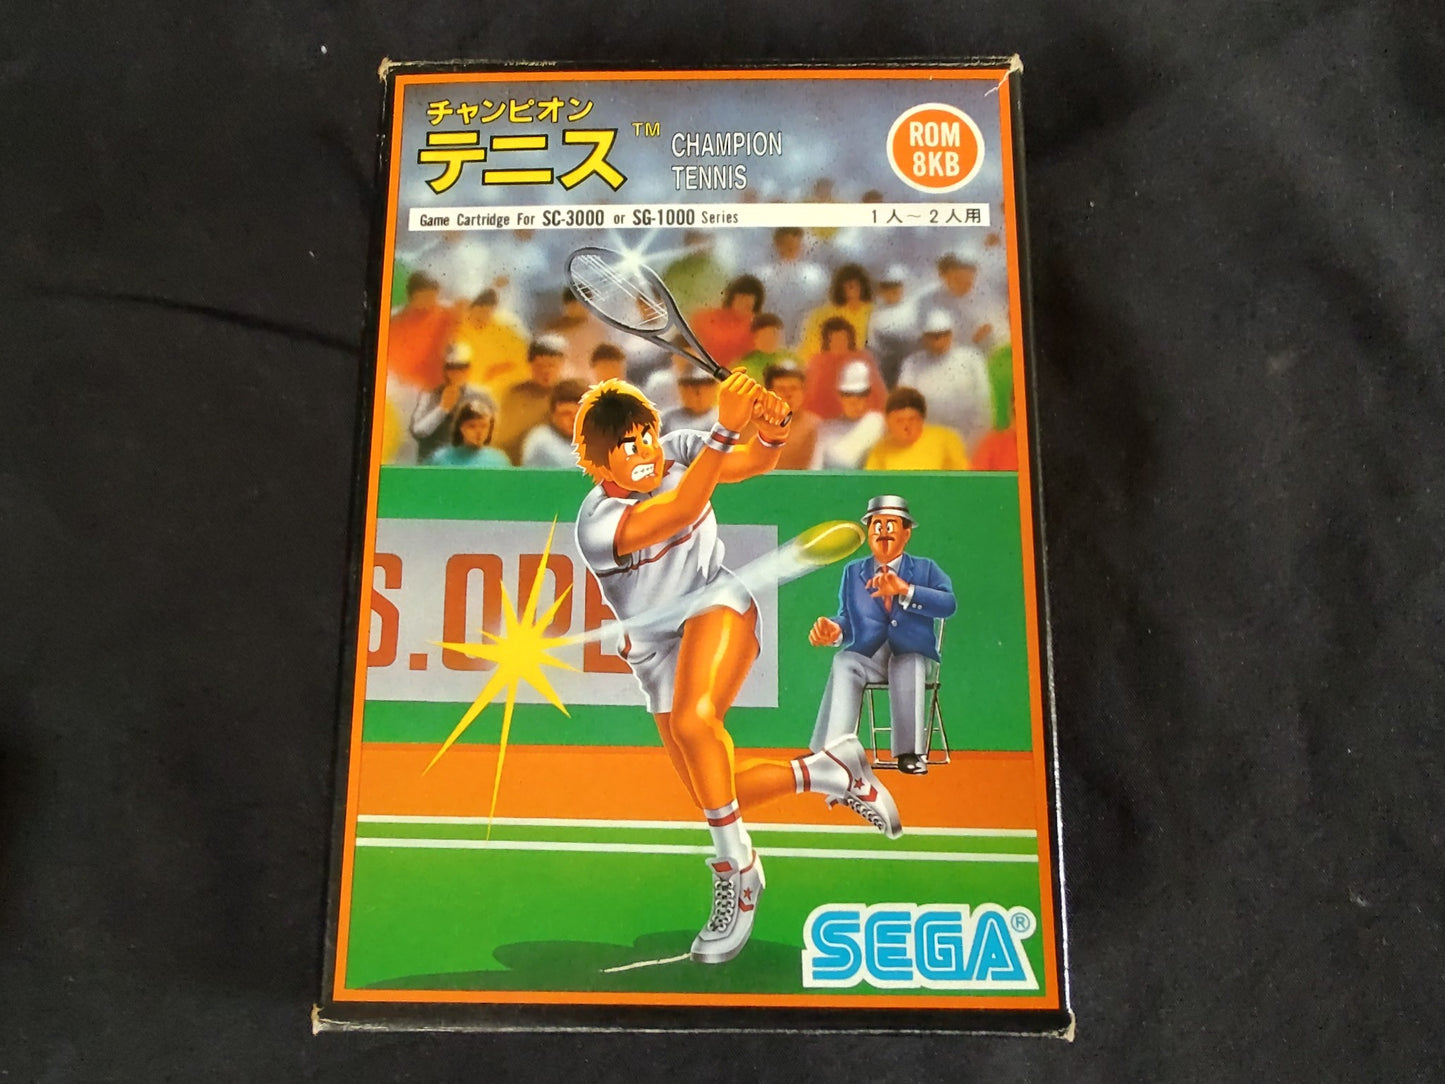 Champion Tennis SEGA Mark 3 Master system Cartridge,Manual,Boxed/tested-f1221-